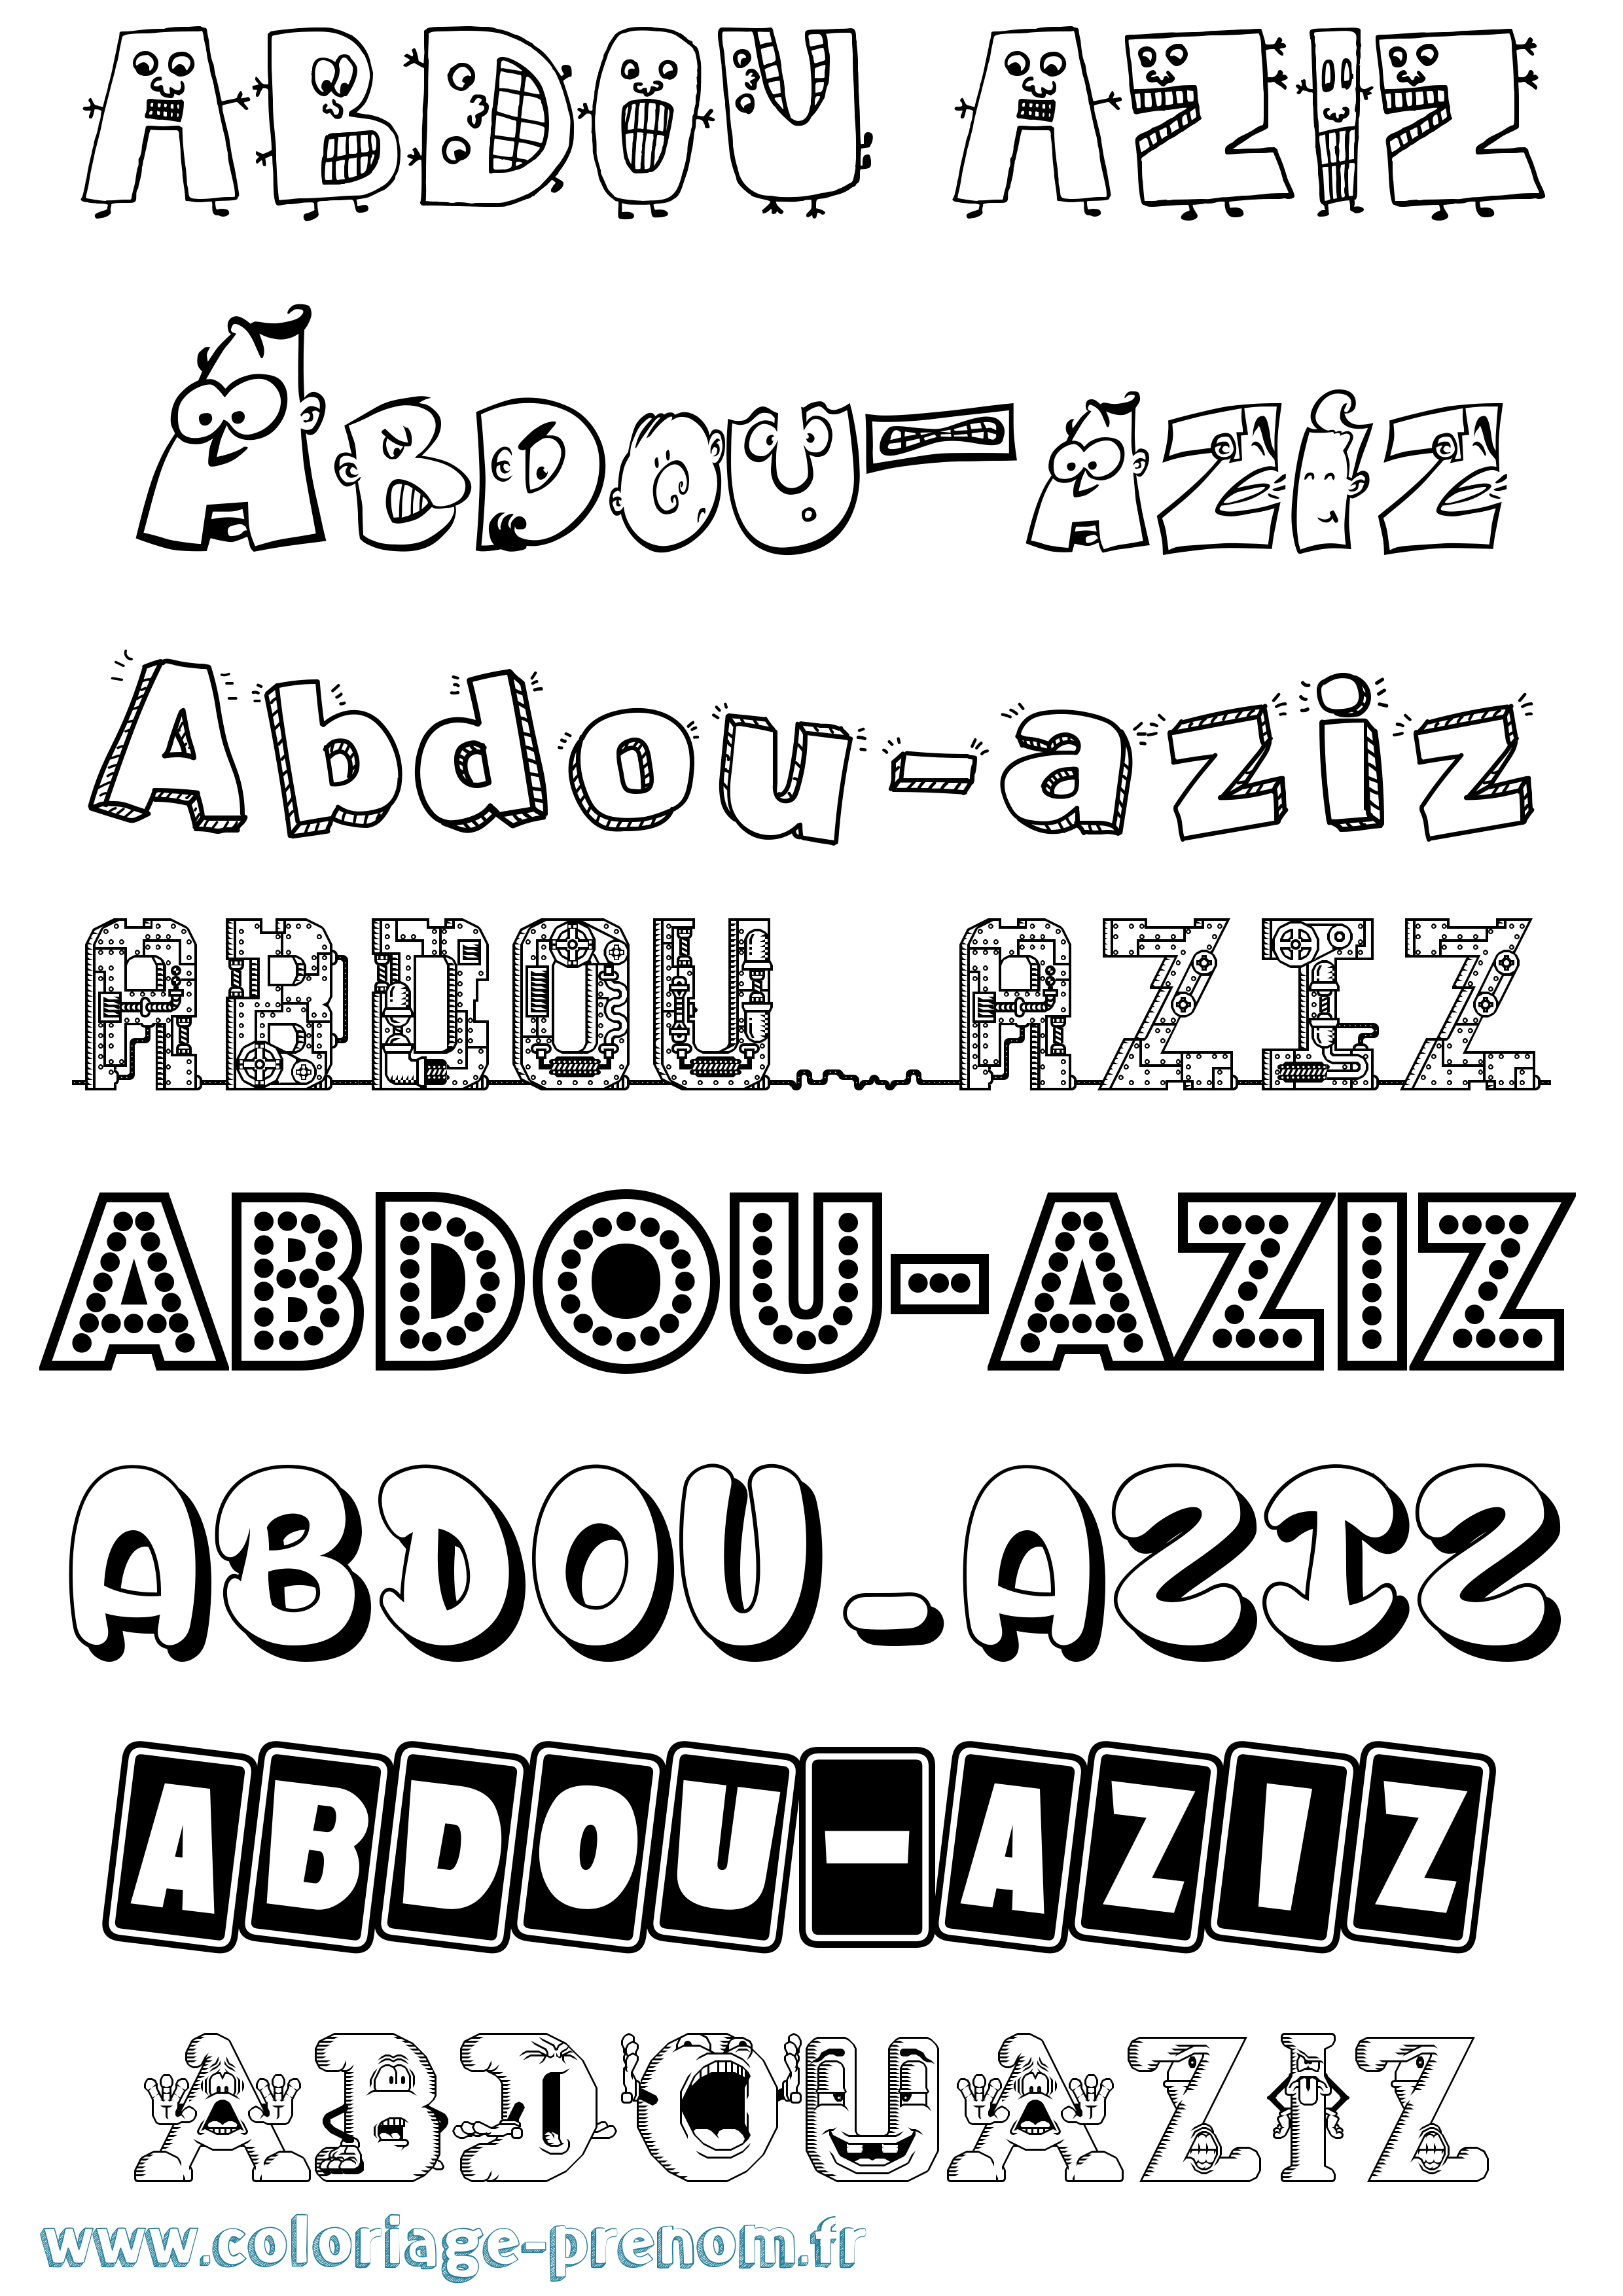 Coloriage prénom Abdou-Aziz Fun